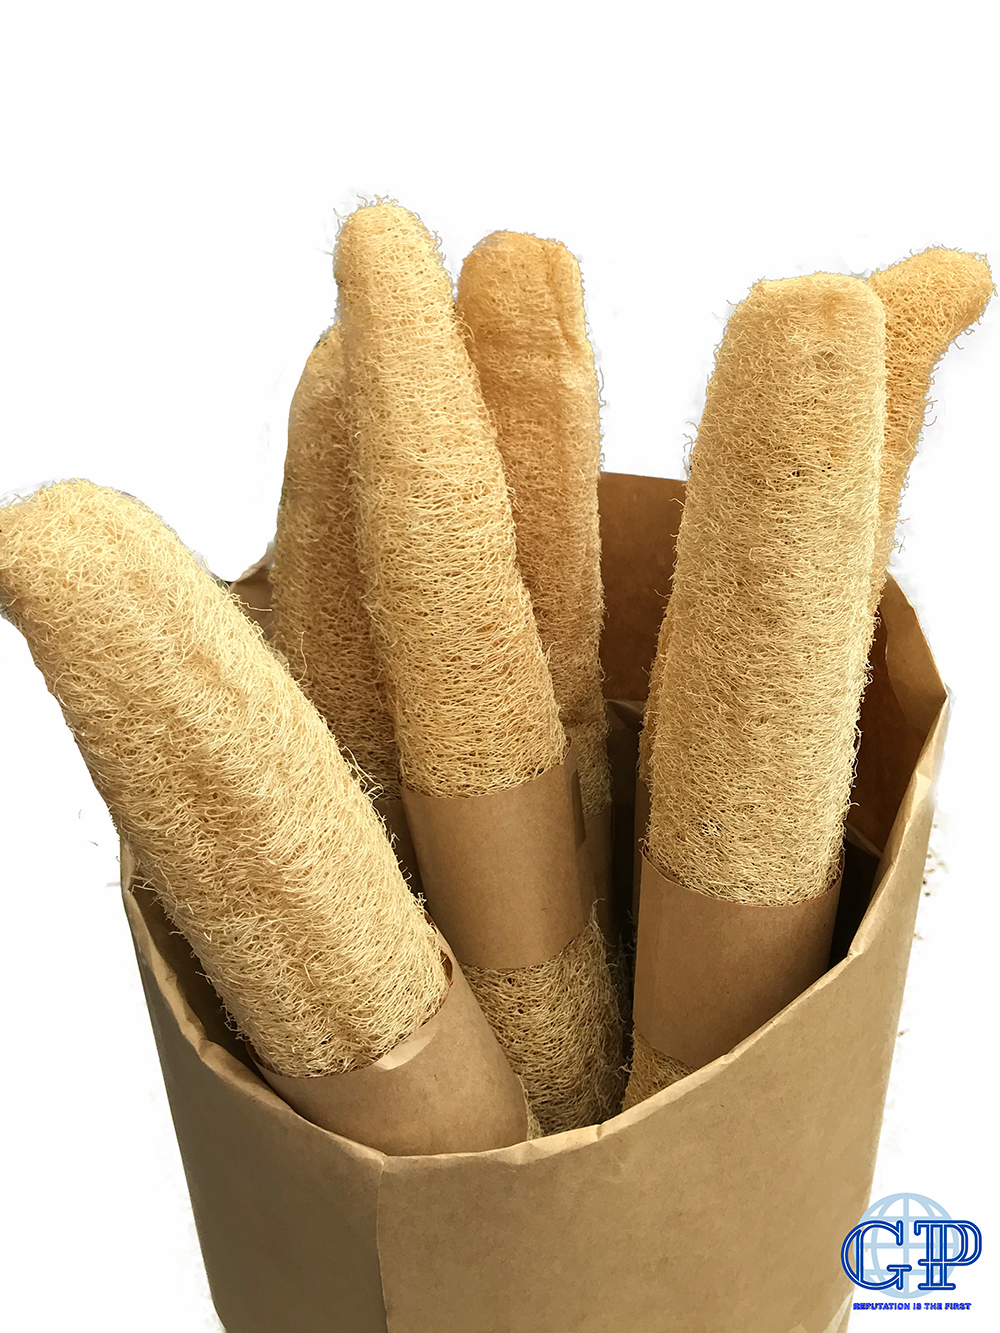 30_ 35cm Whole Loofah_ Biodegradable Natural Loofah Sponges_ Made in Viet Nam _ Exfoliating Sponge